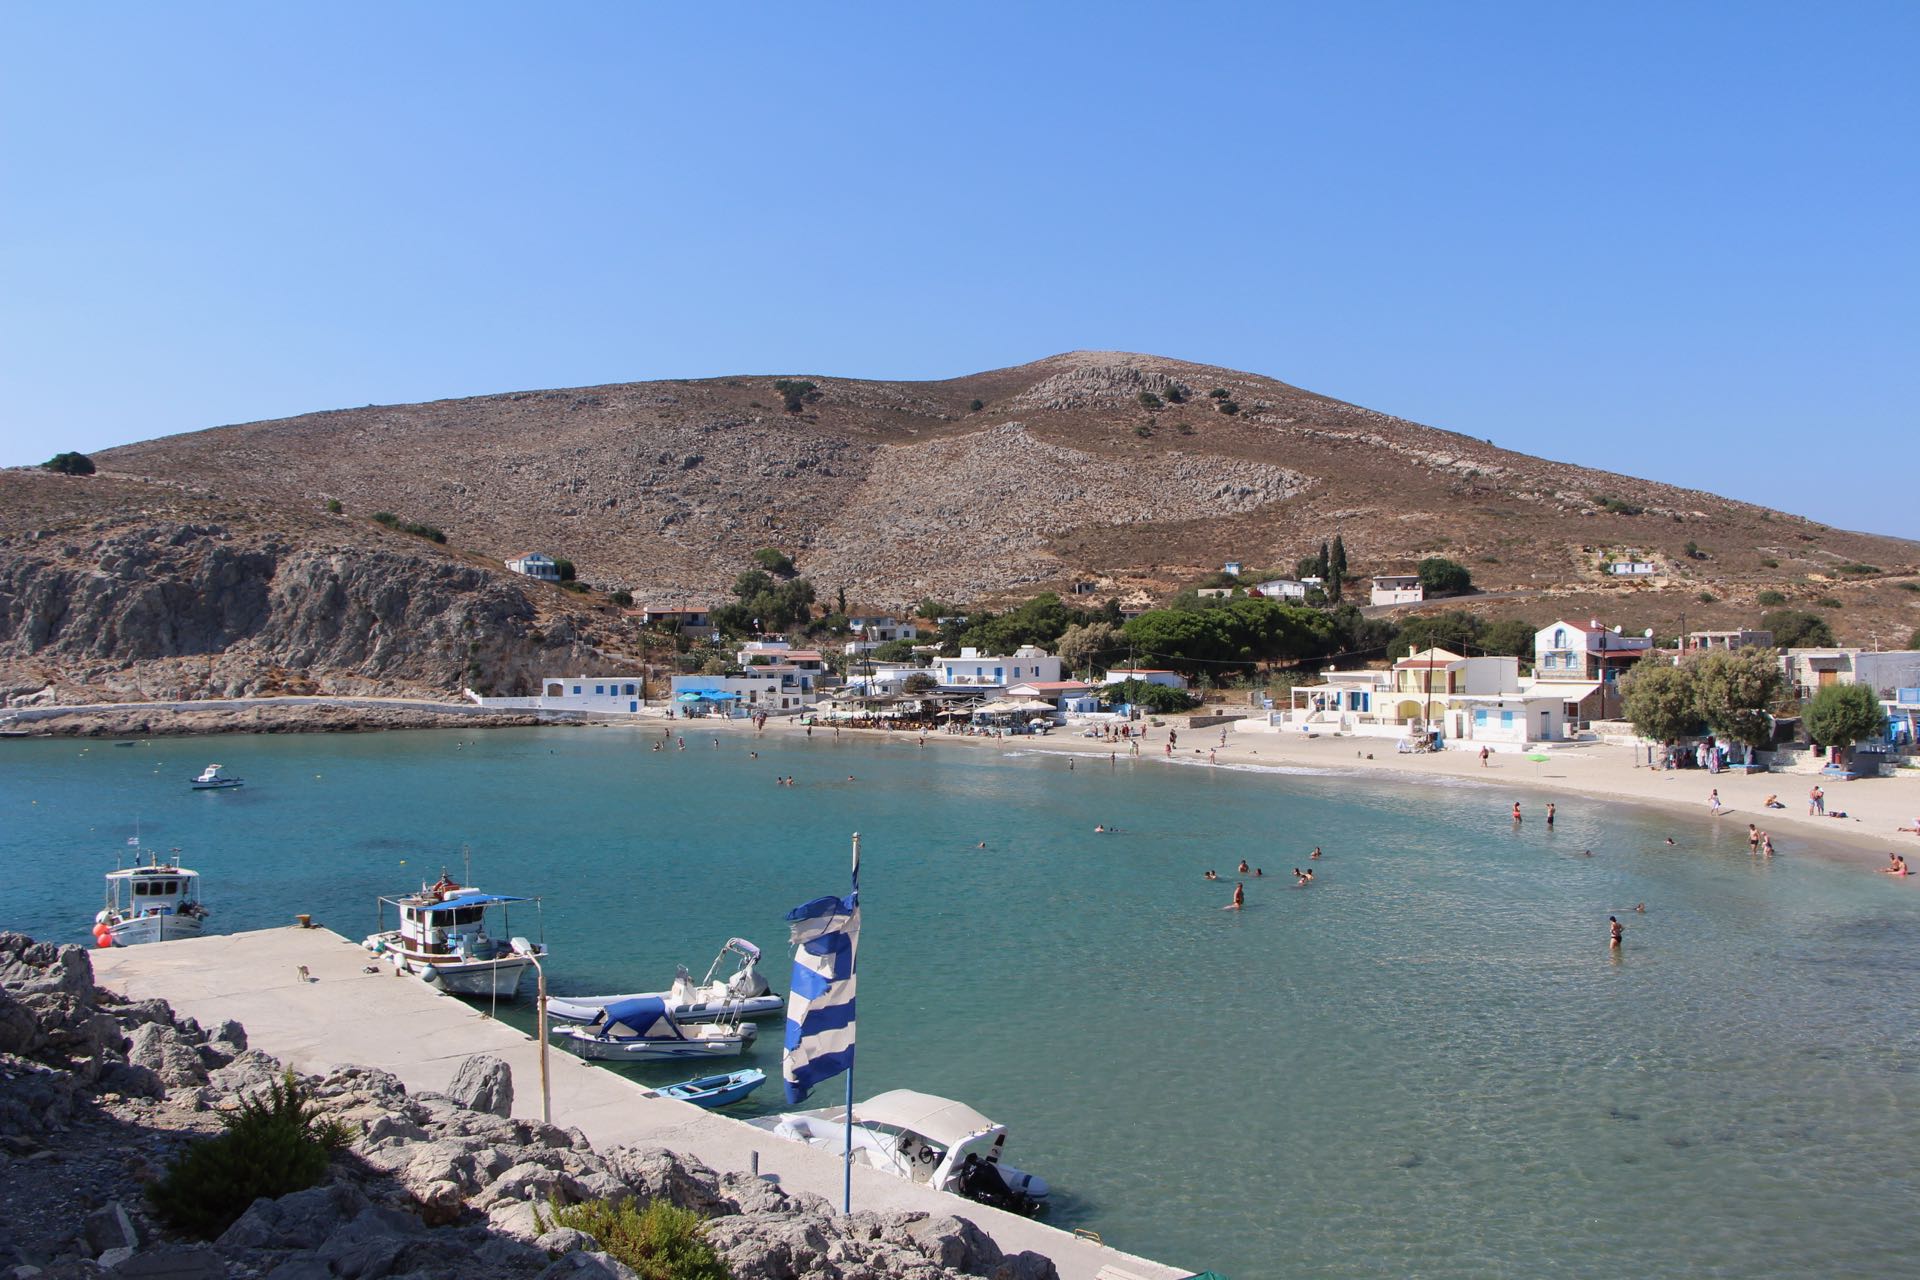 The village of Avlaki on the island of Pserimos